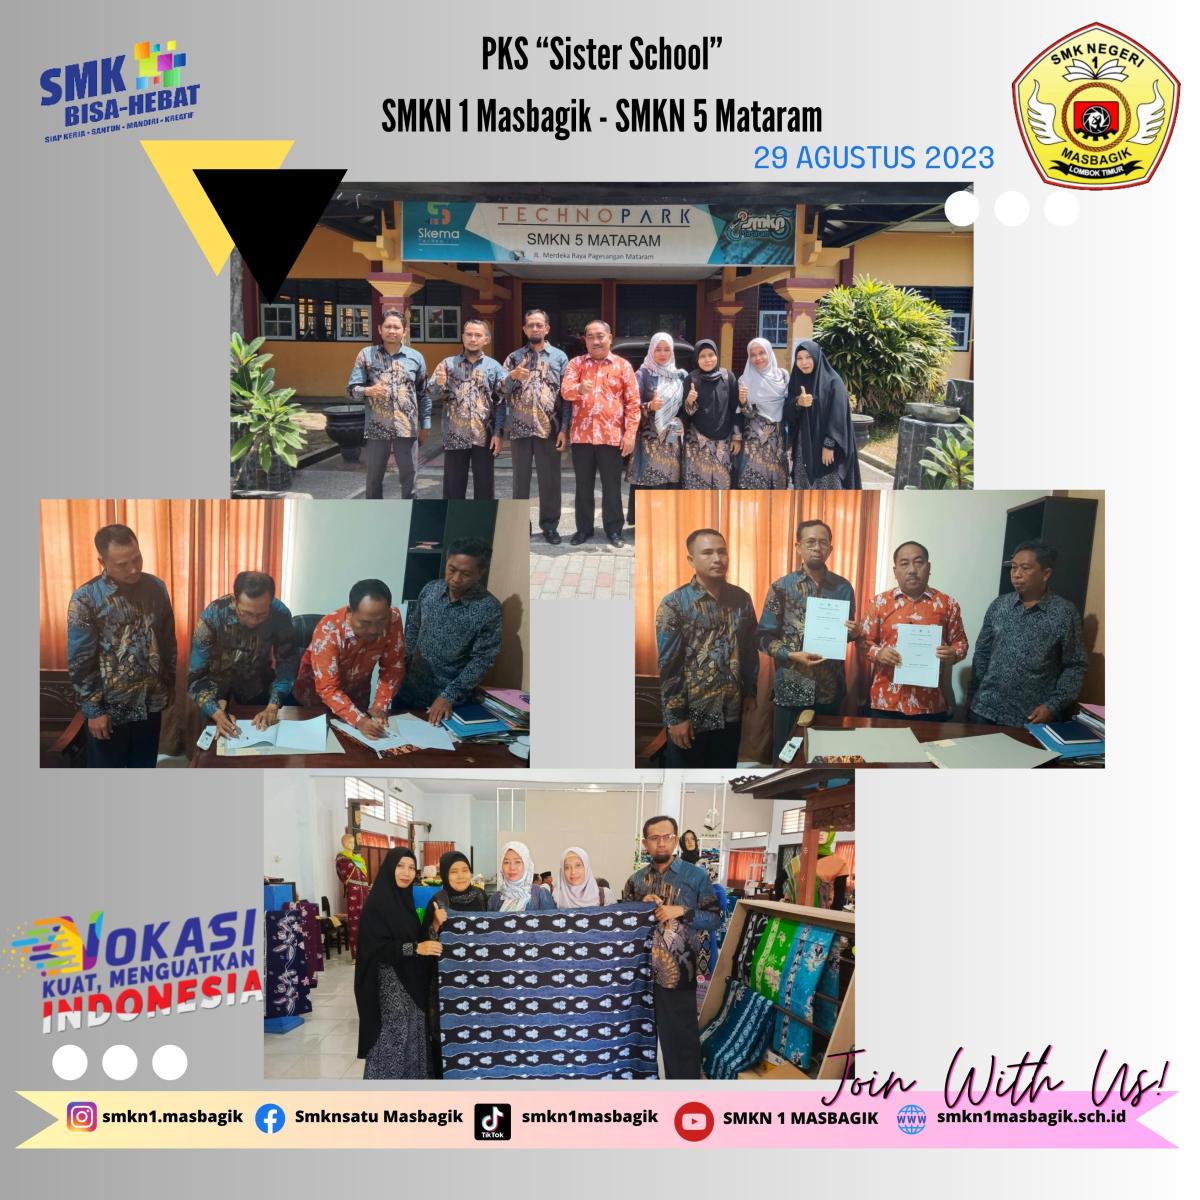 PKS "Sister School" SMKN 1 Masbagik - SMKN 5 Mataram